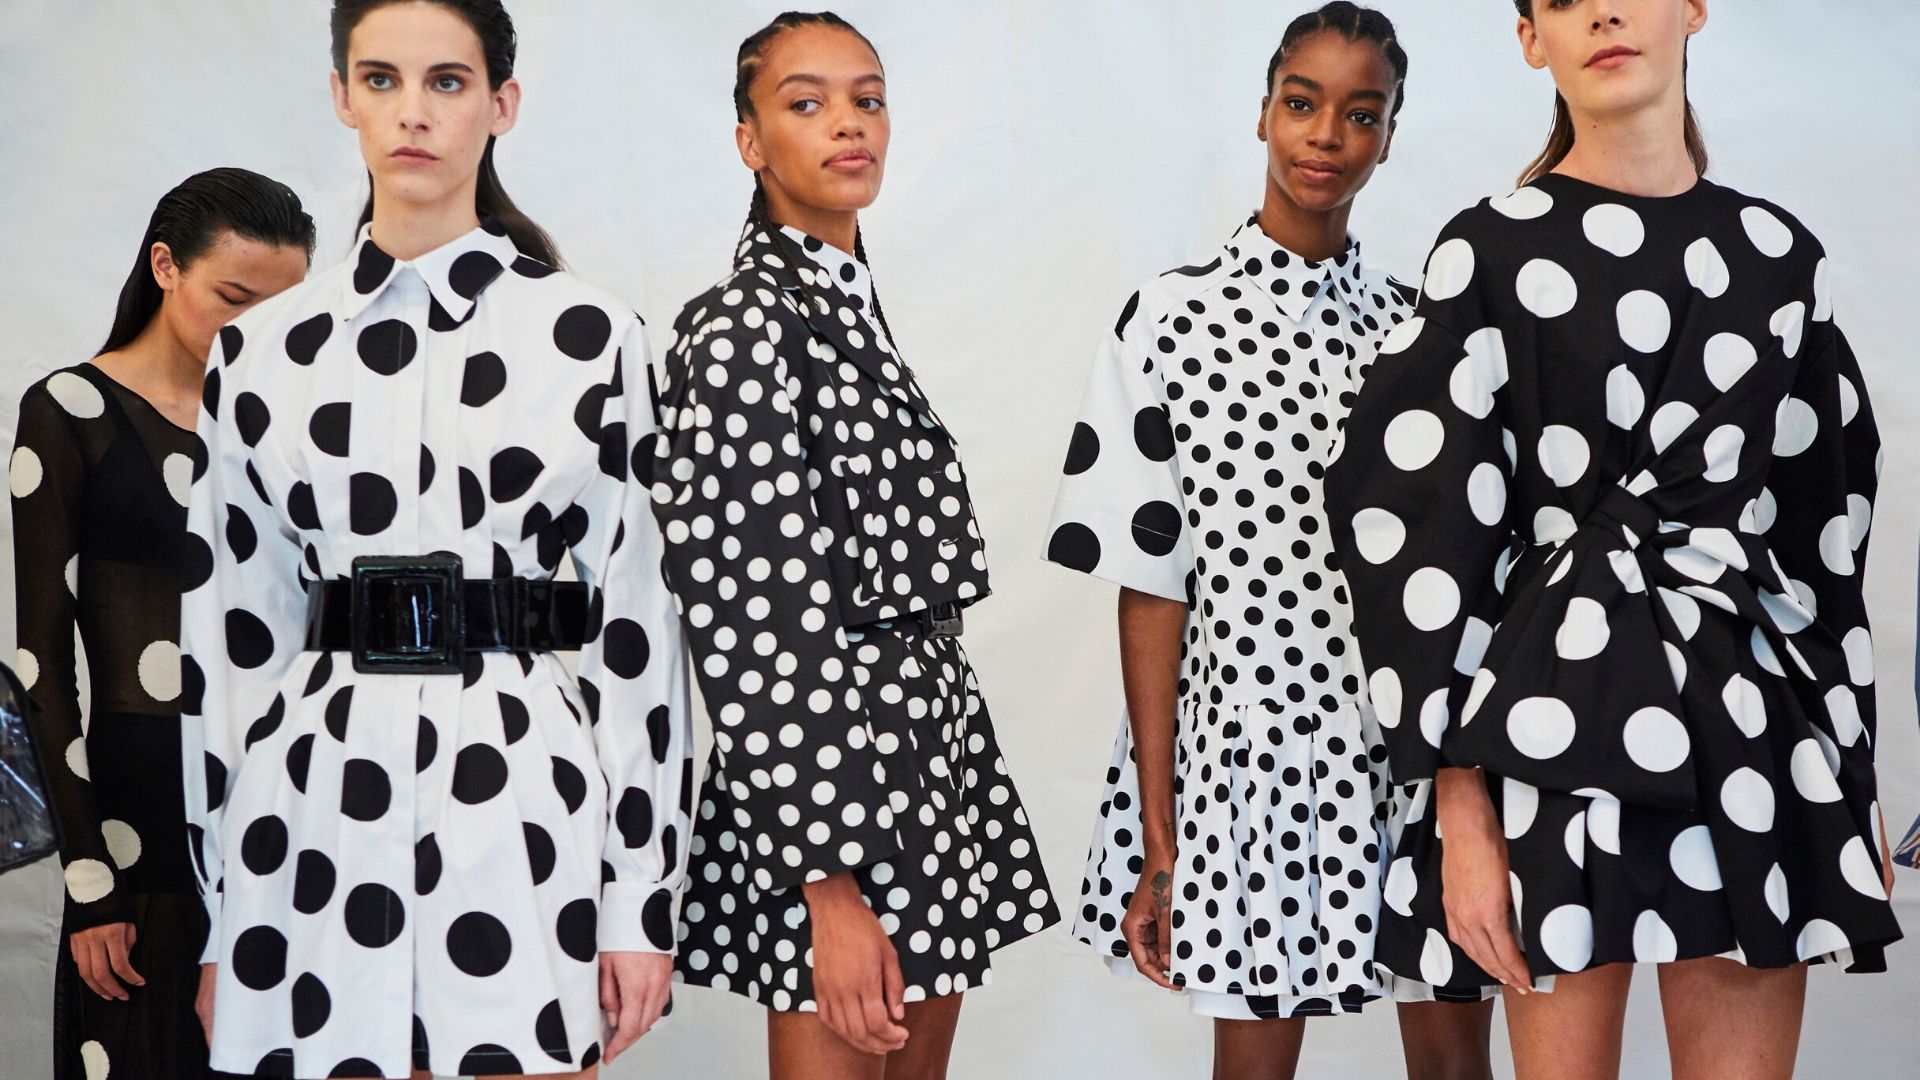 CAROLINE SUITS Women's Elegant Stylish Fashion Polka Dots Design